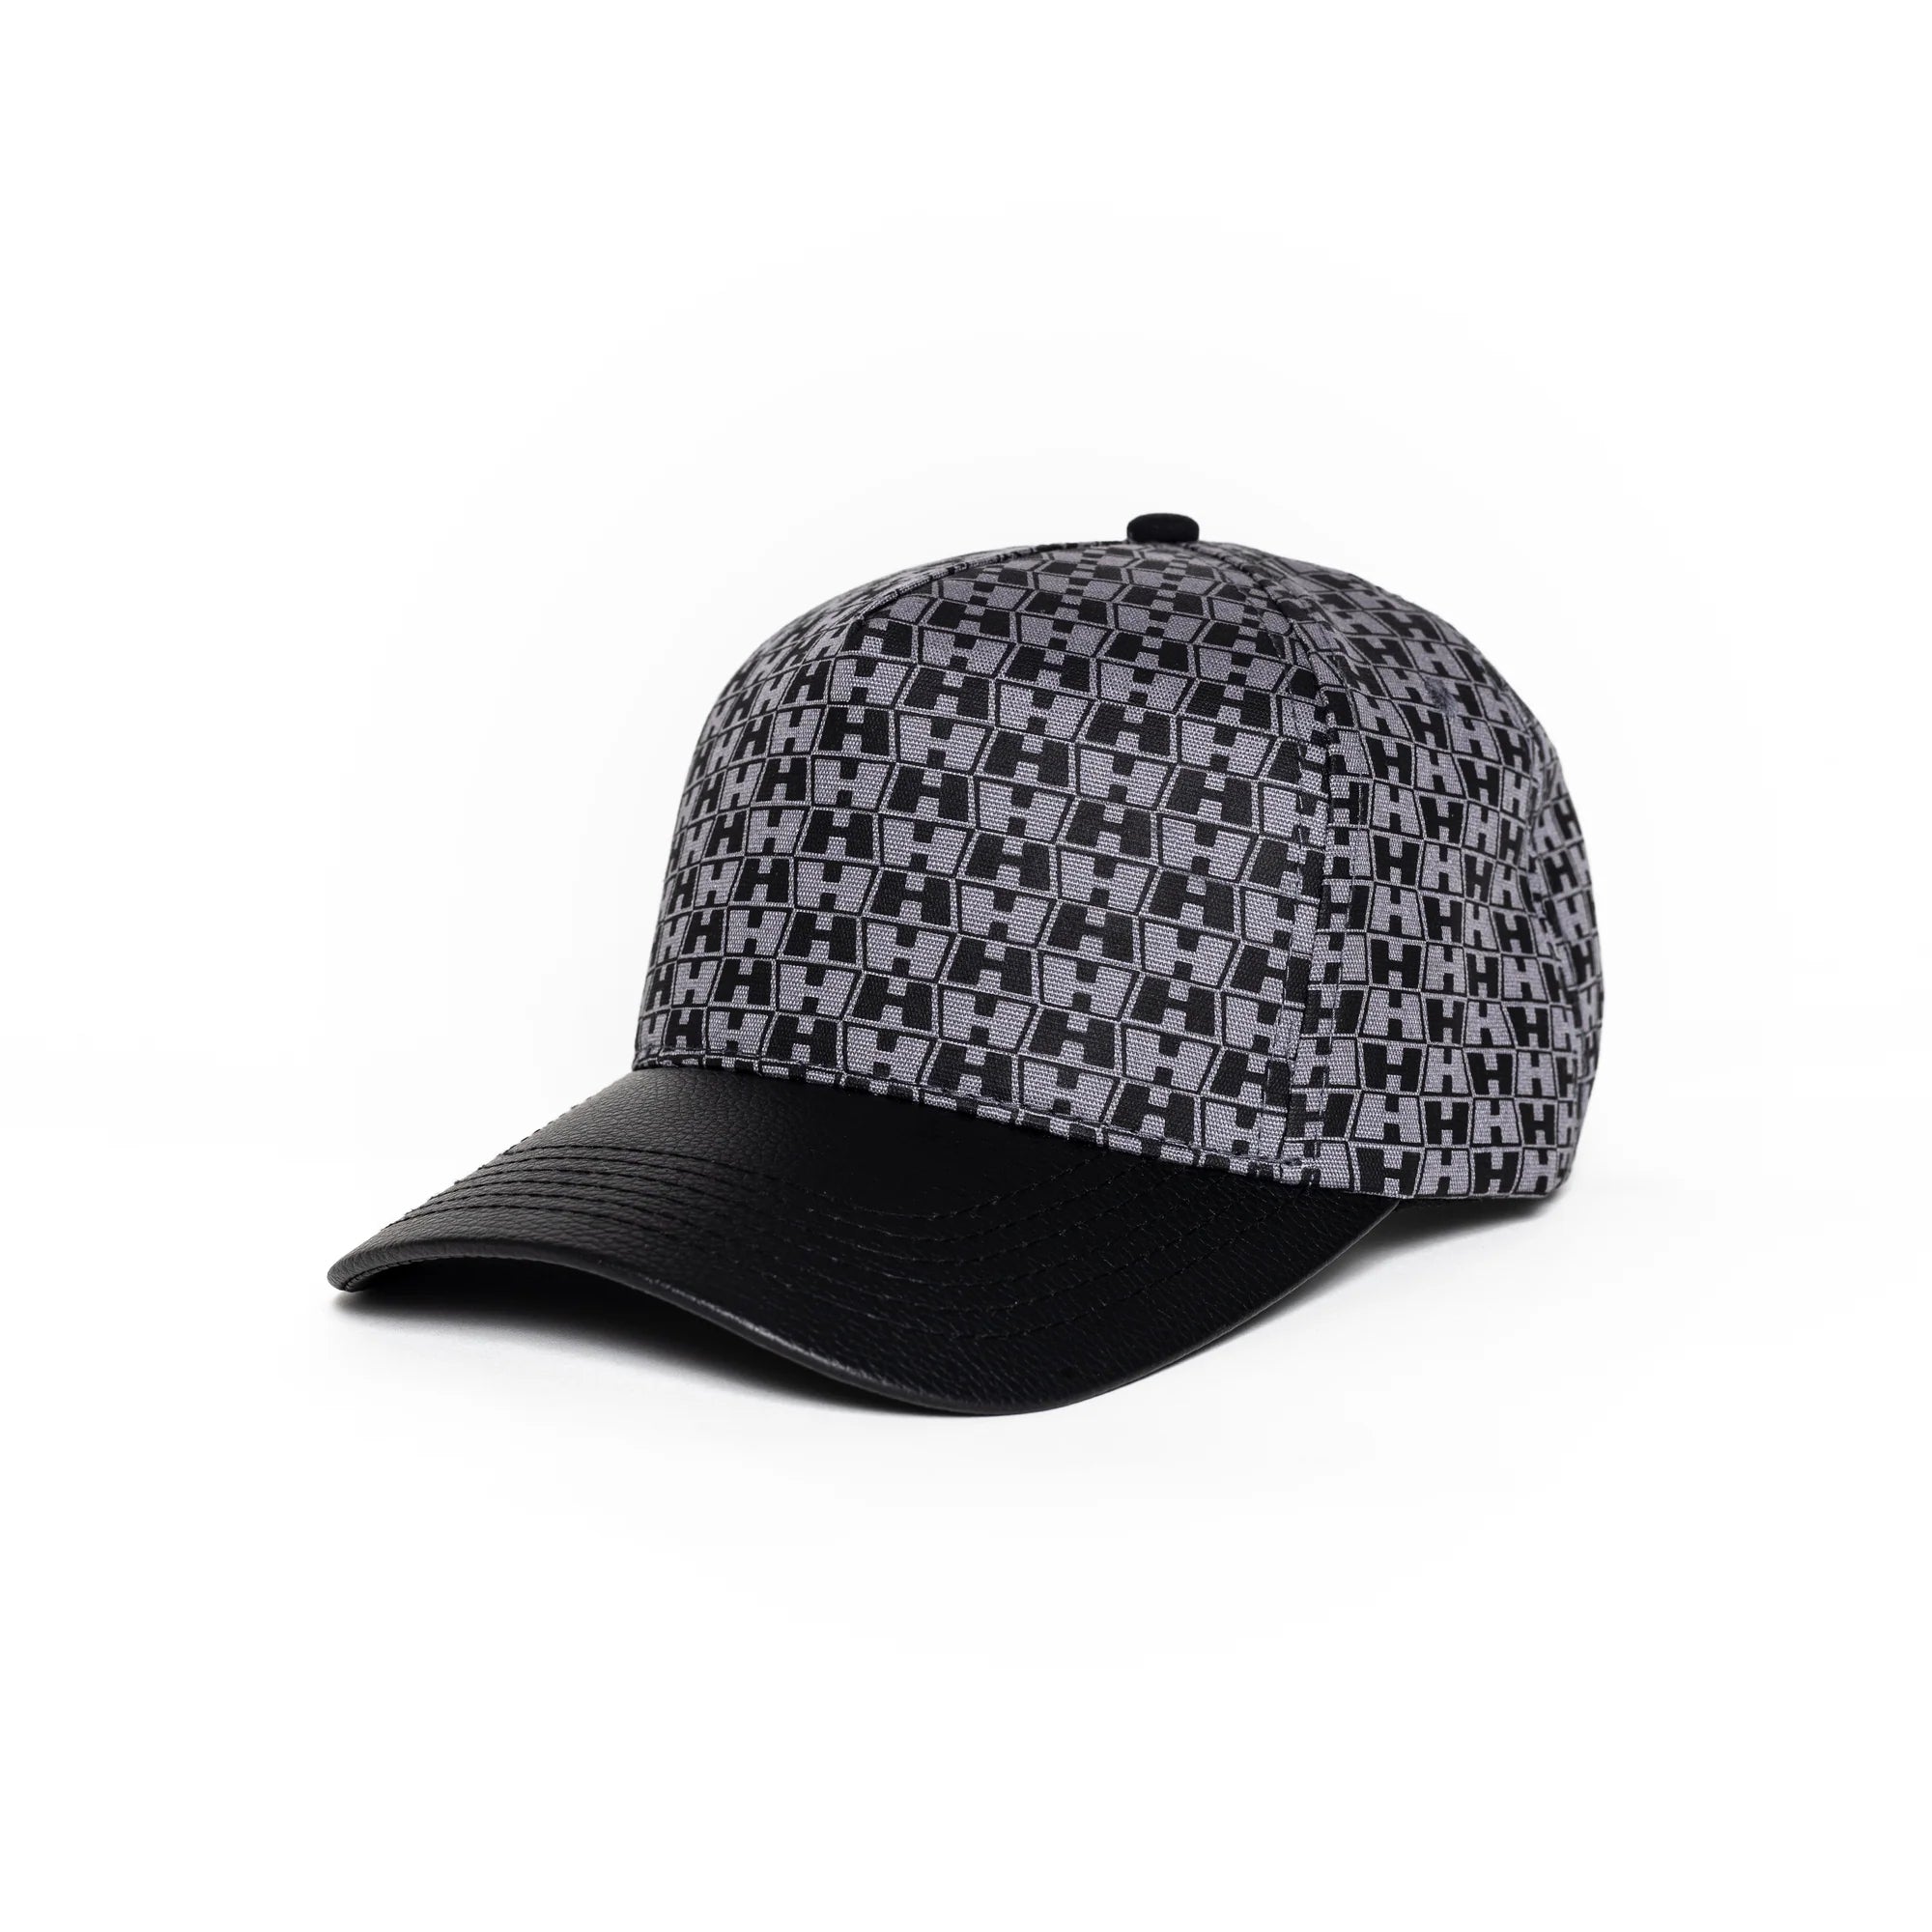 Hardies Double H Leather Brim Hat -(black)